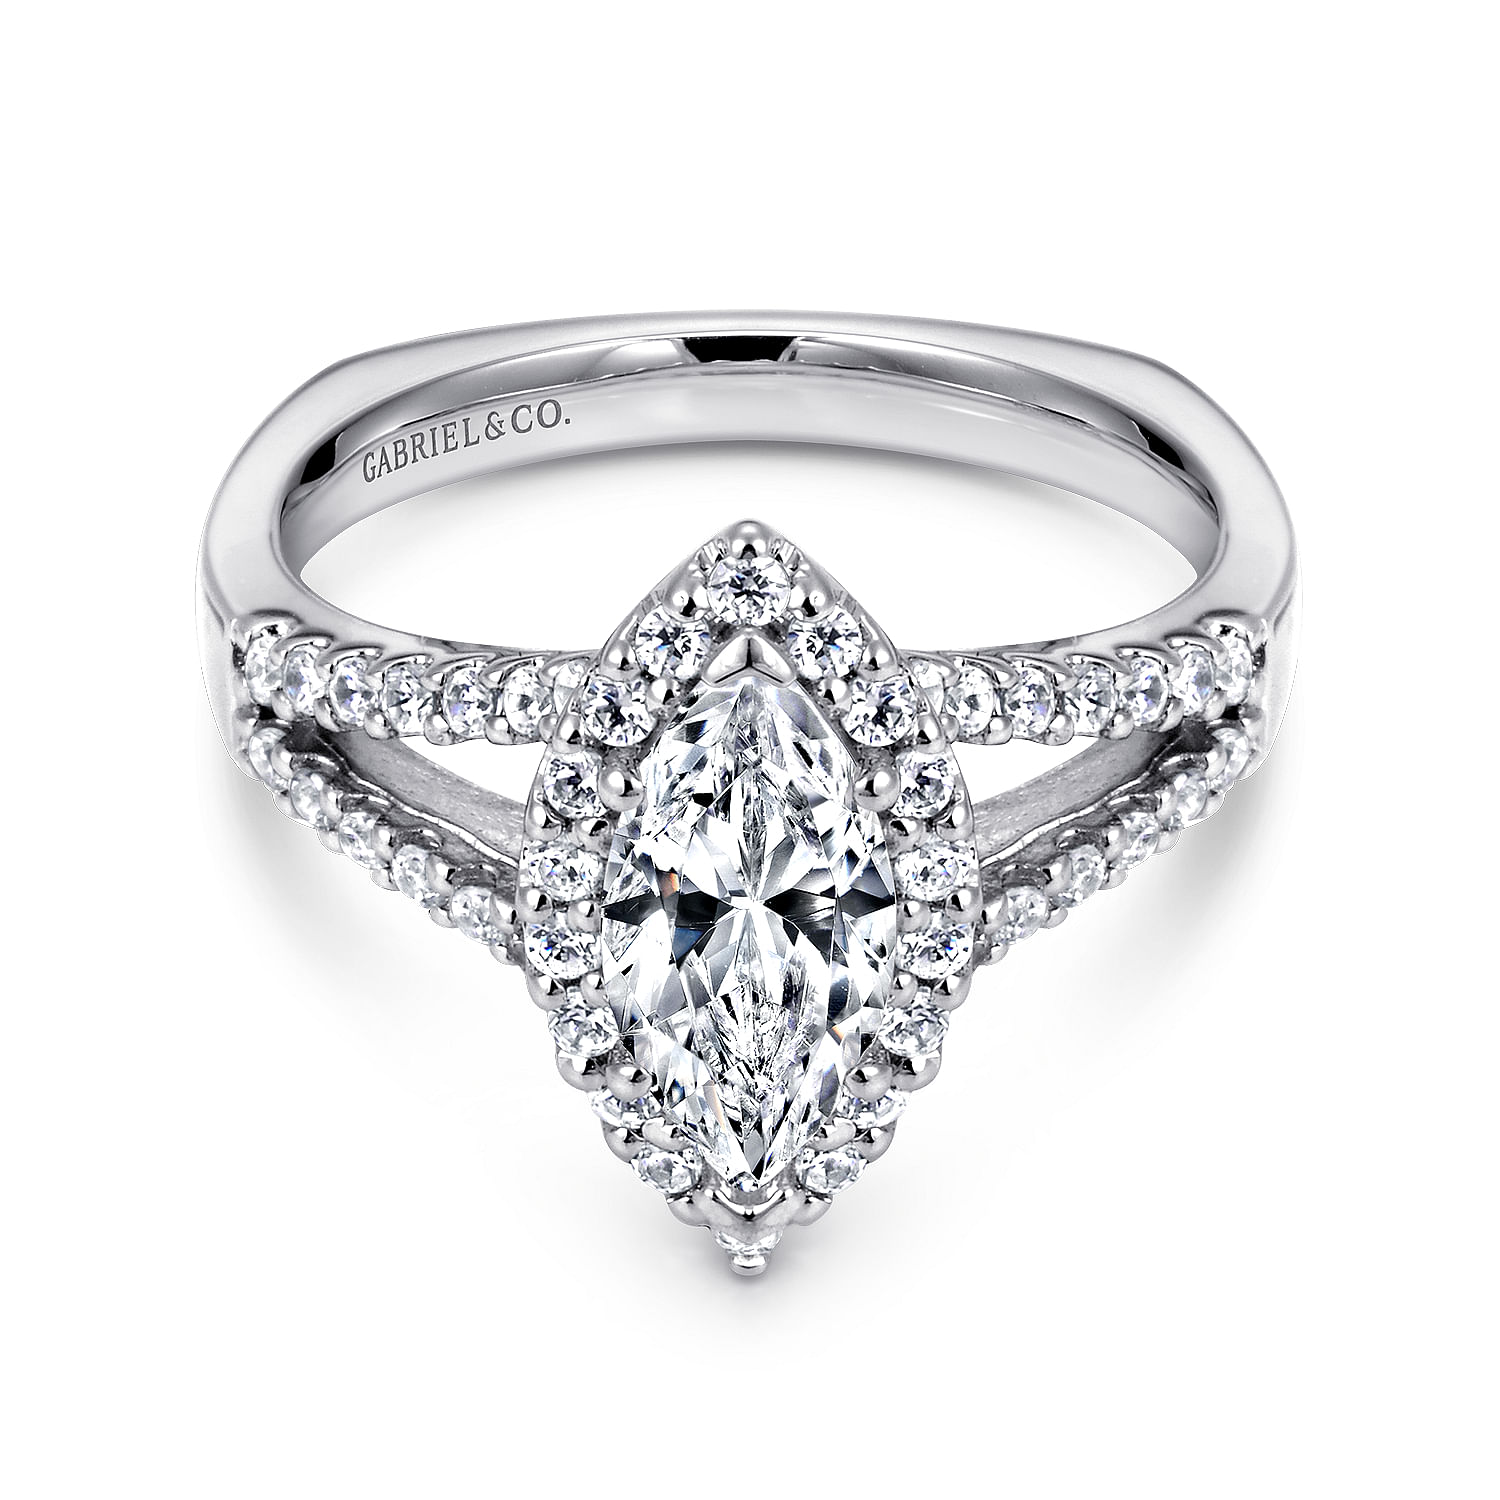 Drew---14K-White-Gold-Marquise-Halo-Diamond-Engagement-Ring1